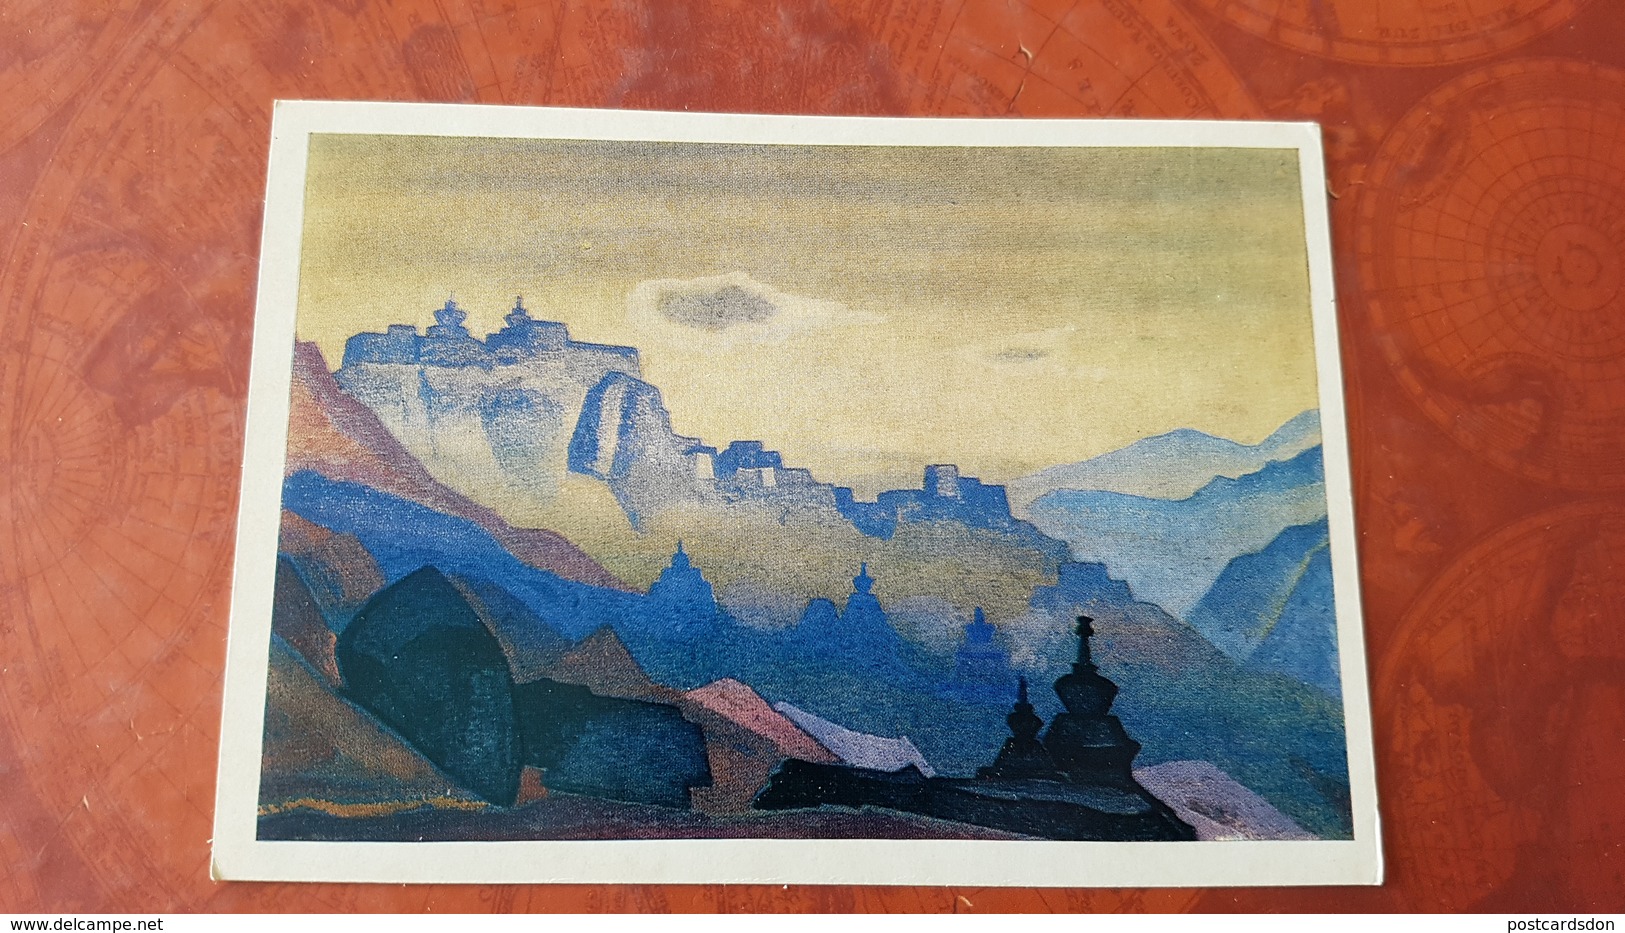 Nicholas Roerich - "Ladak" -  HIMALAYA - Tibet -  - Old USSR PC 1974 - Tibet